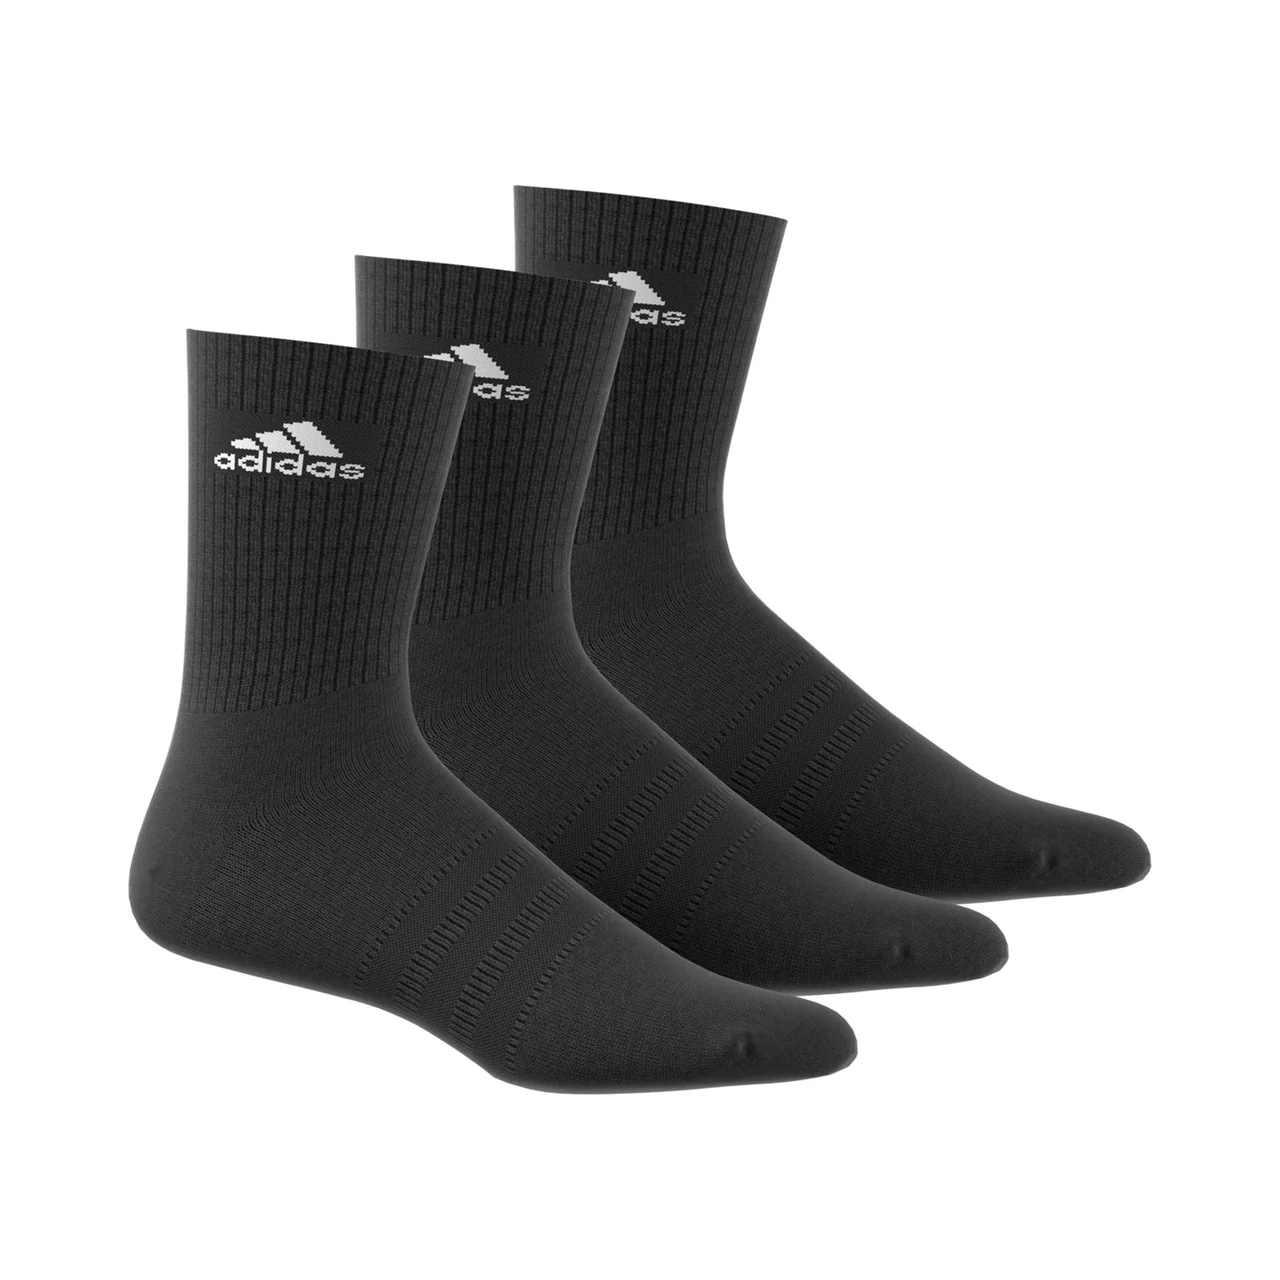 Adidas 3-Stripes Performance Crew Socks 3-pack Black